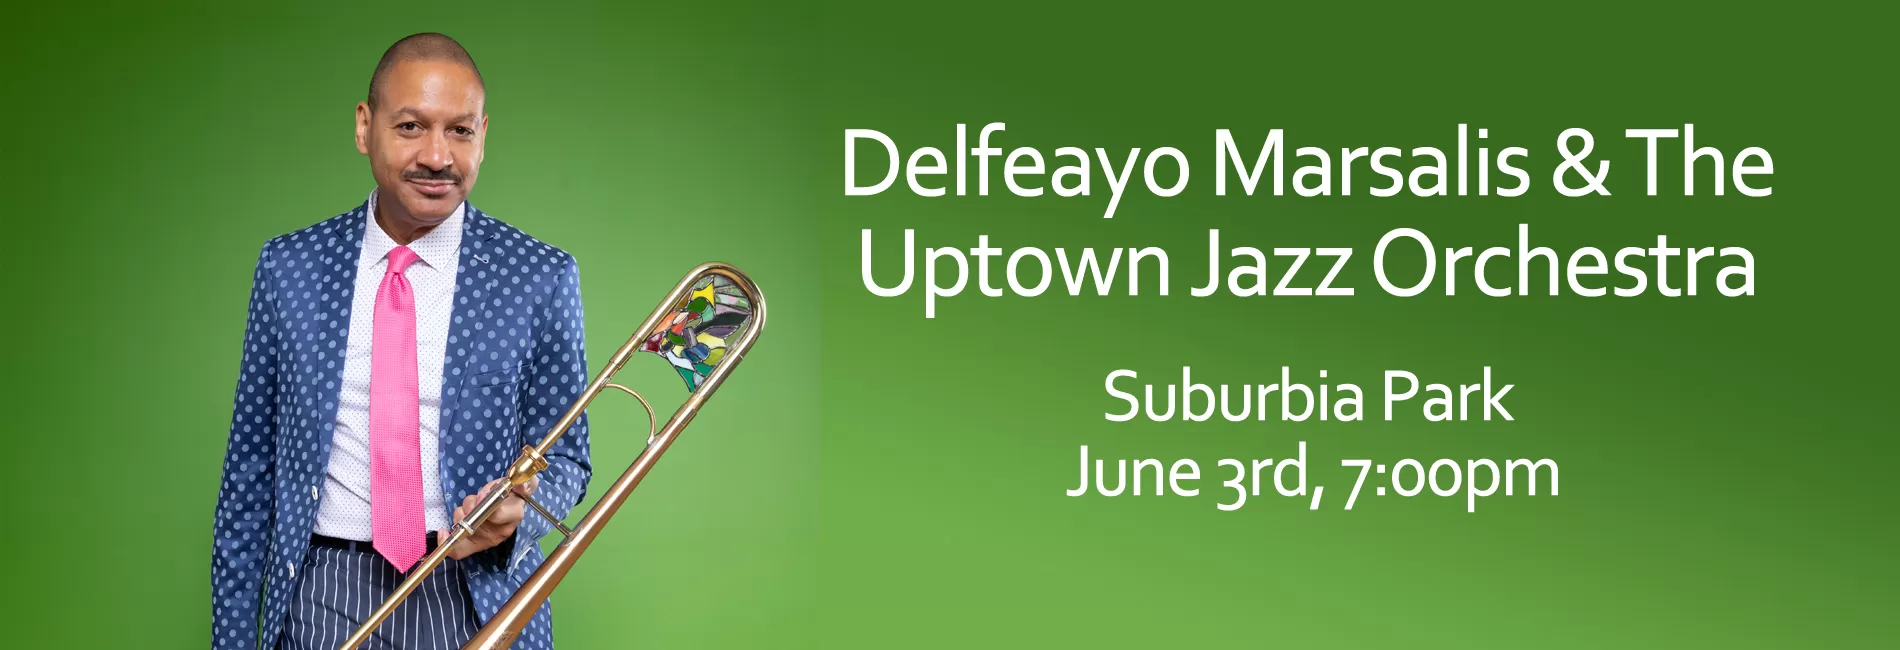 Delfeayo Marsalis & The Uptown Jazz Orchestra